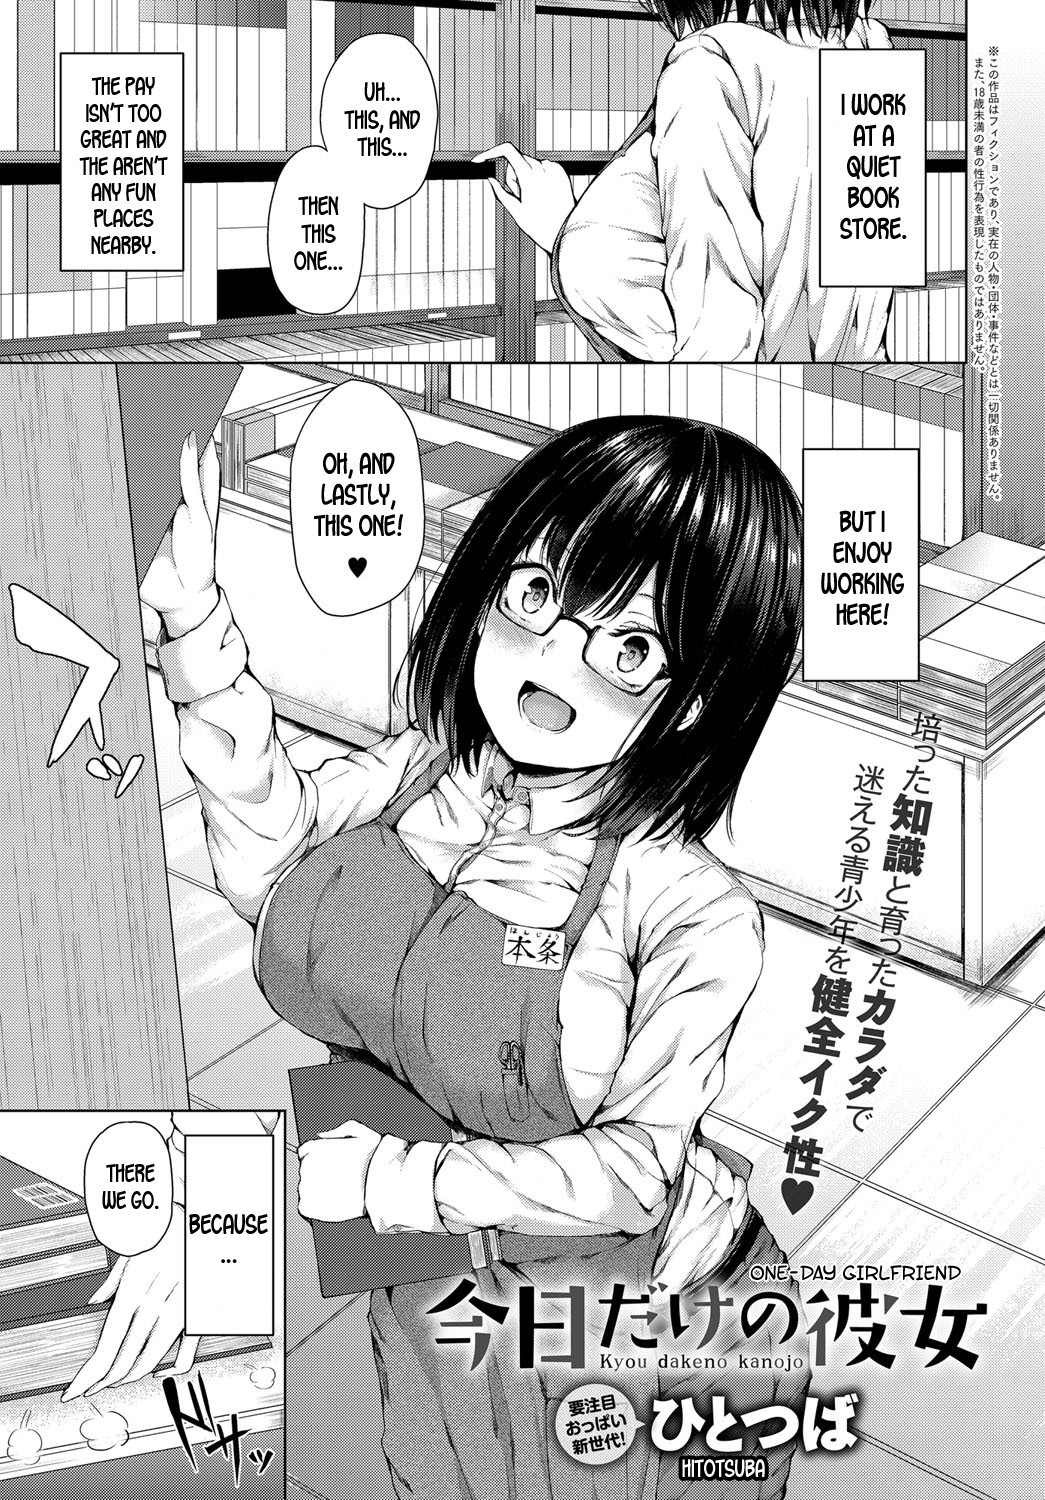 Hentai Manga Comic-One-Day Girlfriend-Read-1